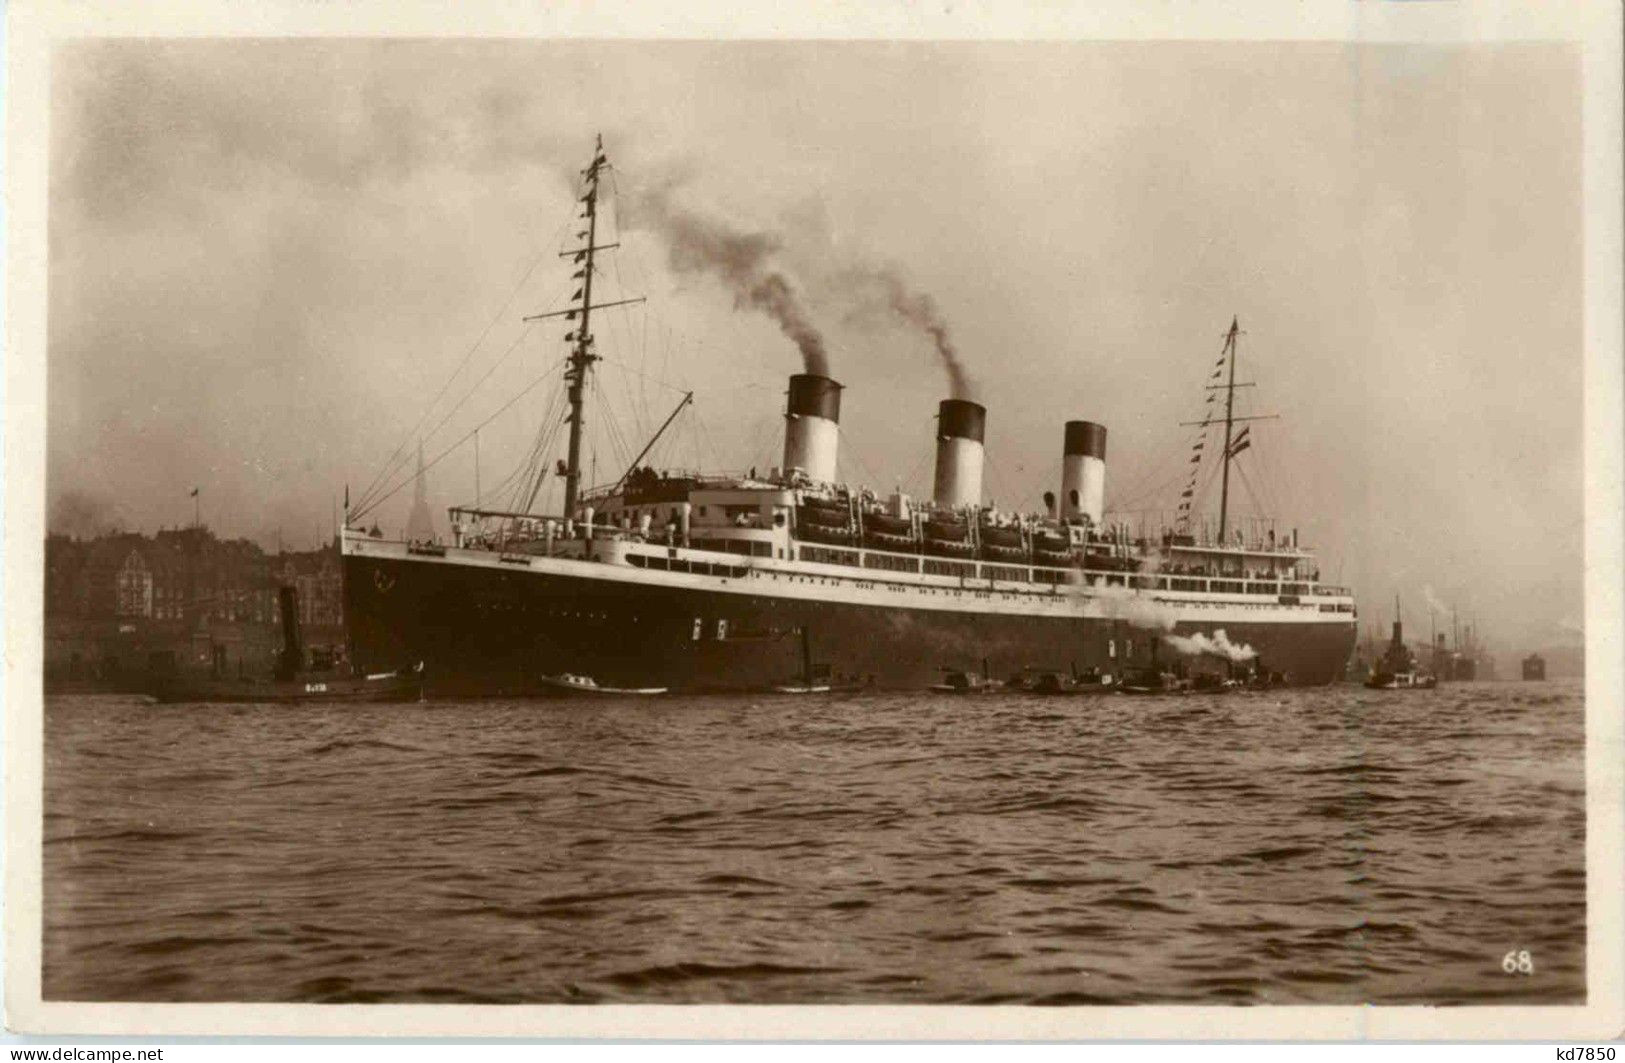 Dampfer Cap Arcona - Steamers